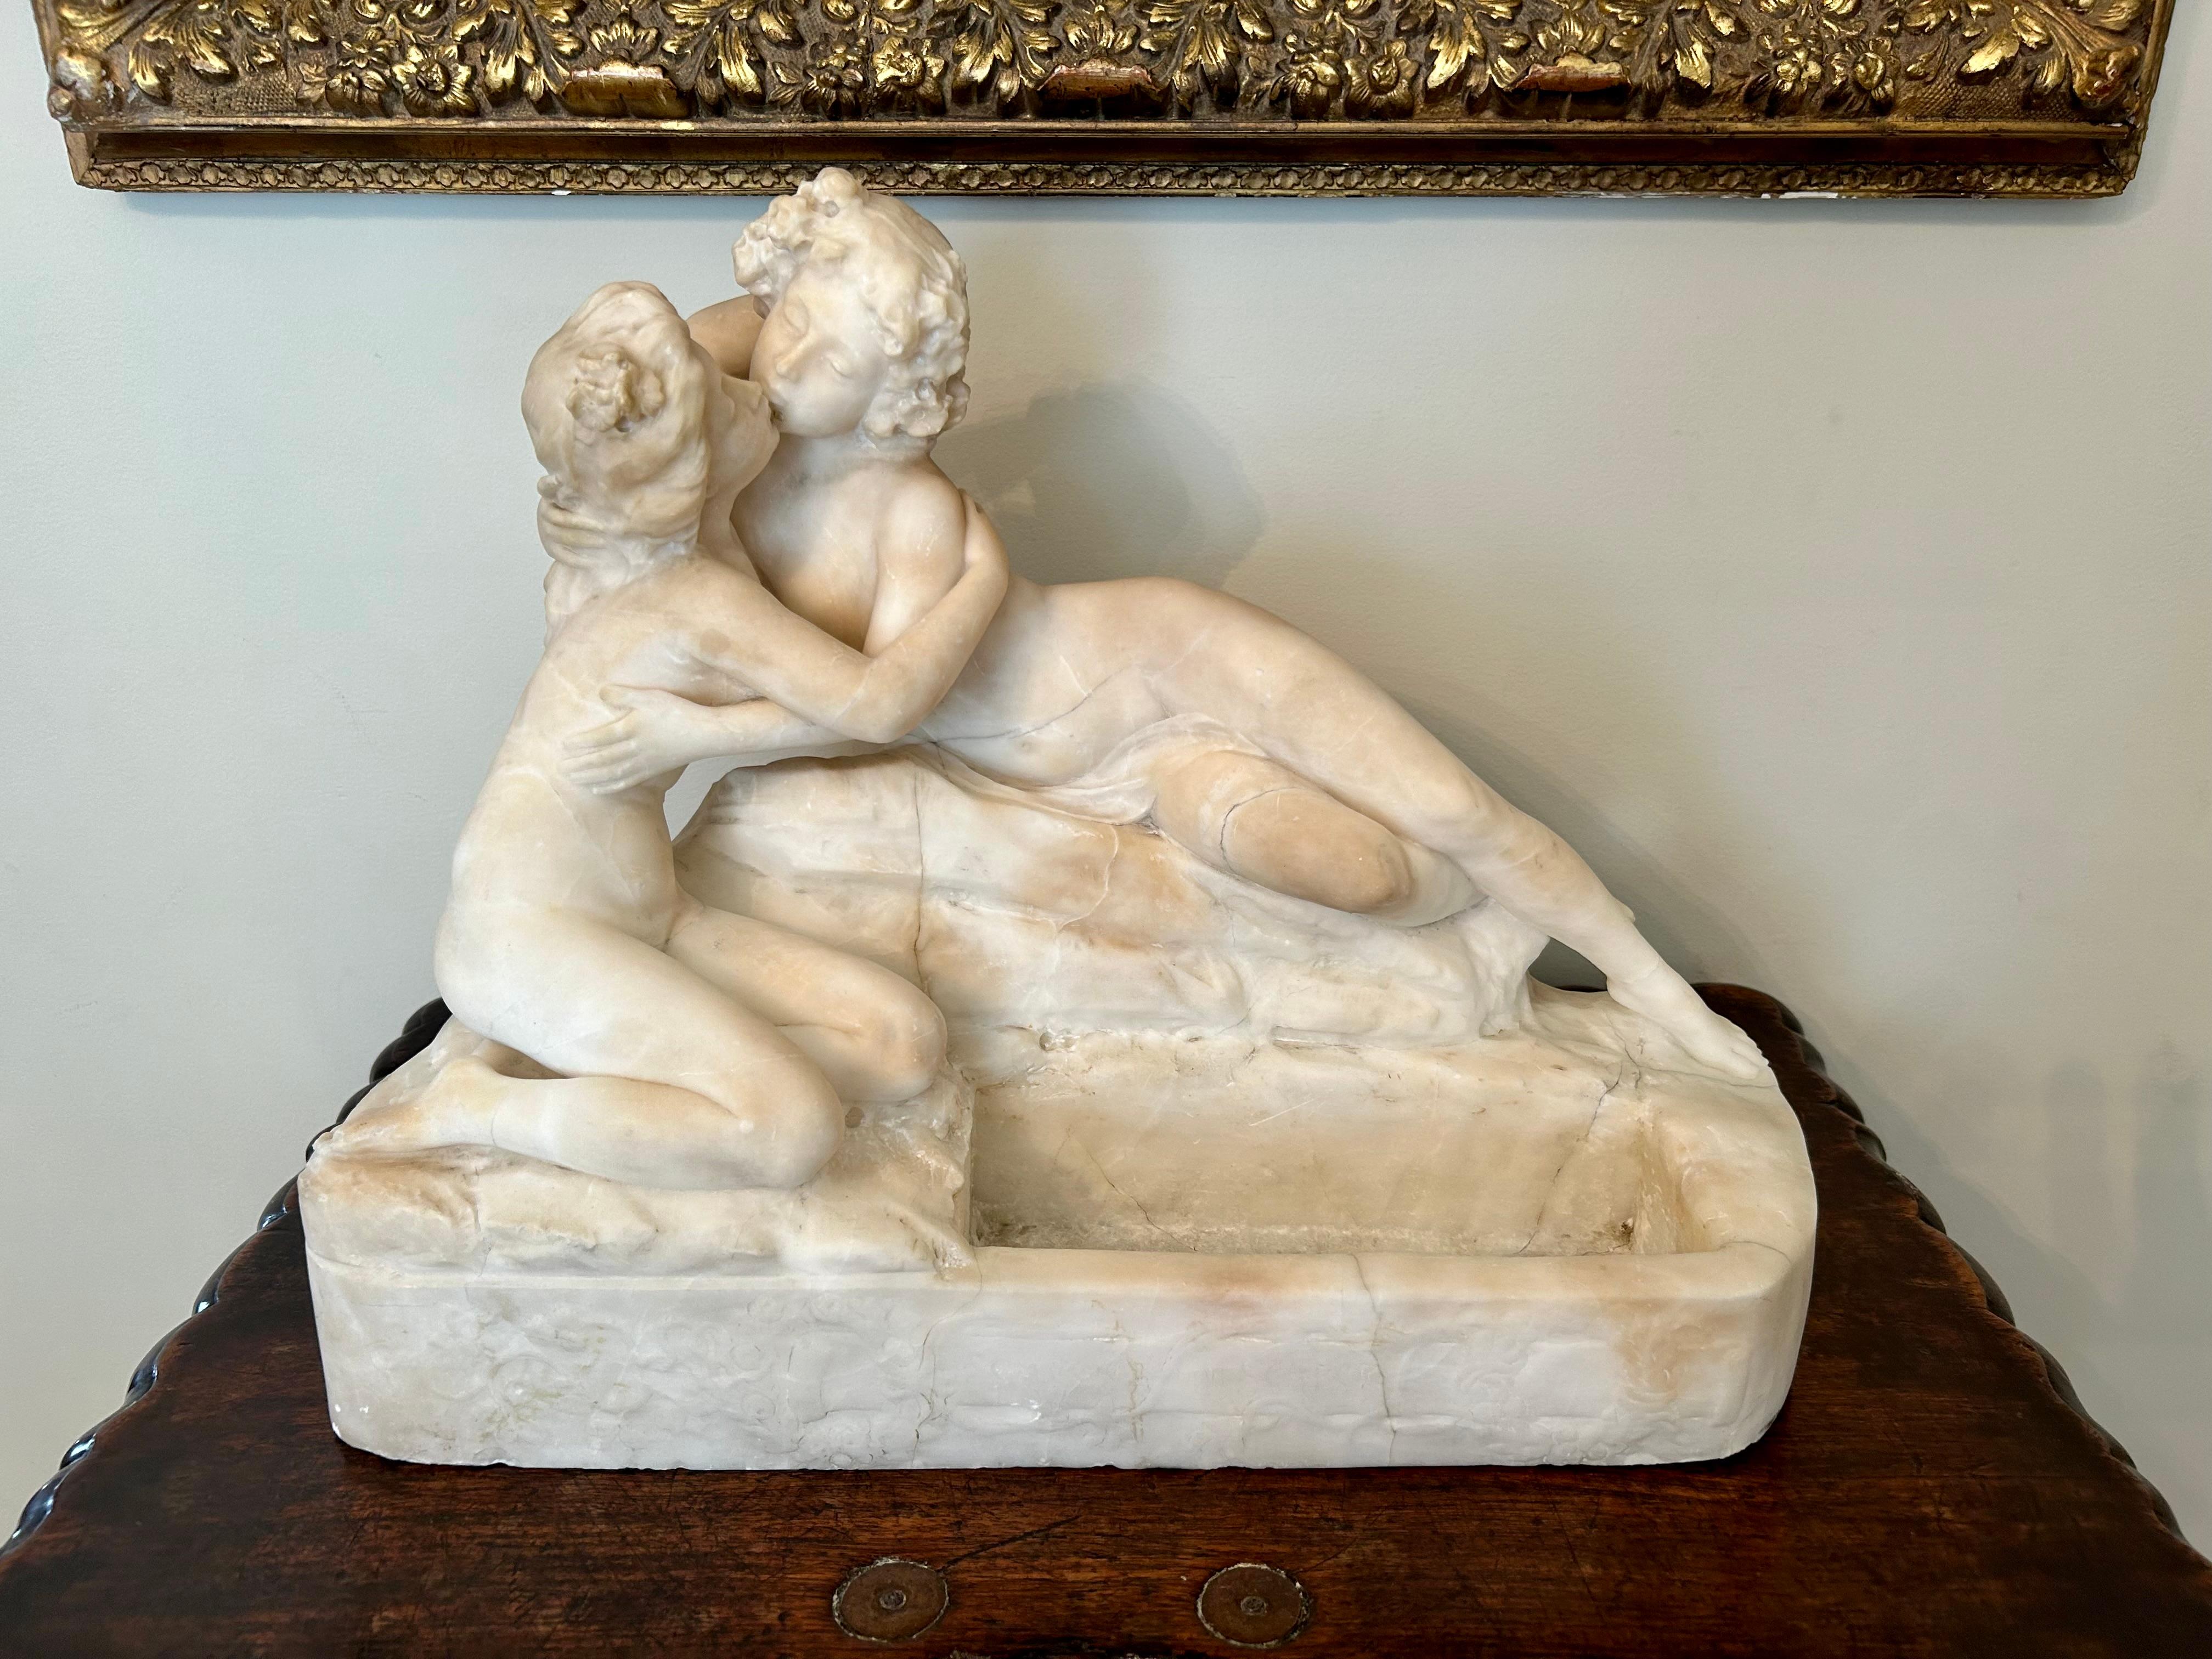 20th Century Art Nouveau Marble Sculpture of Two Figures Kissing For Sale